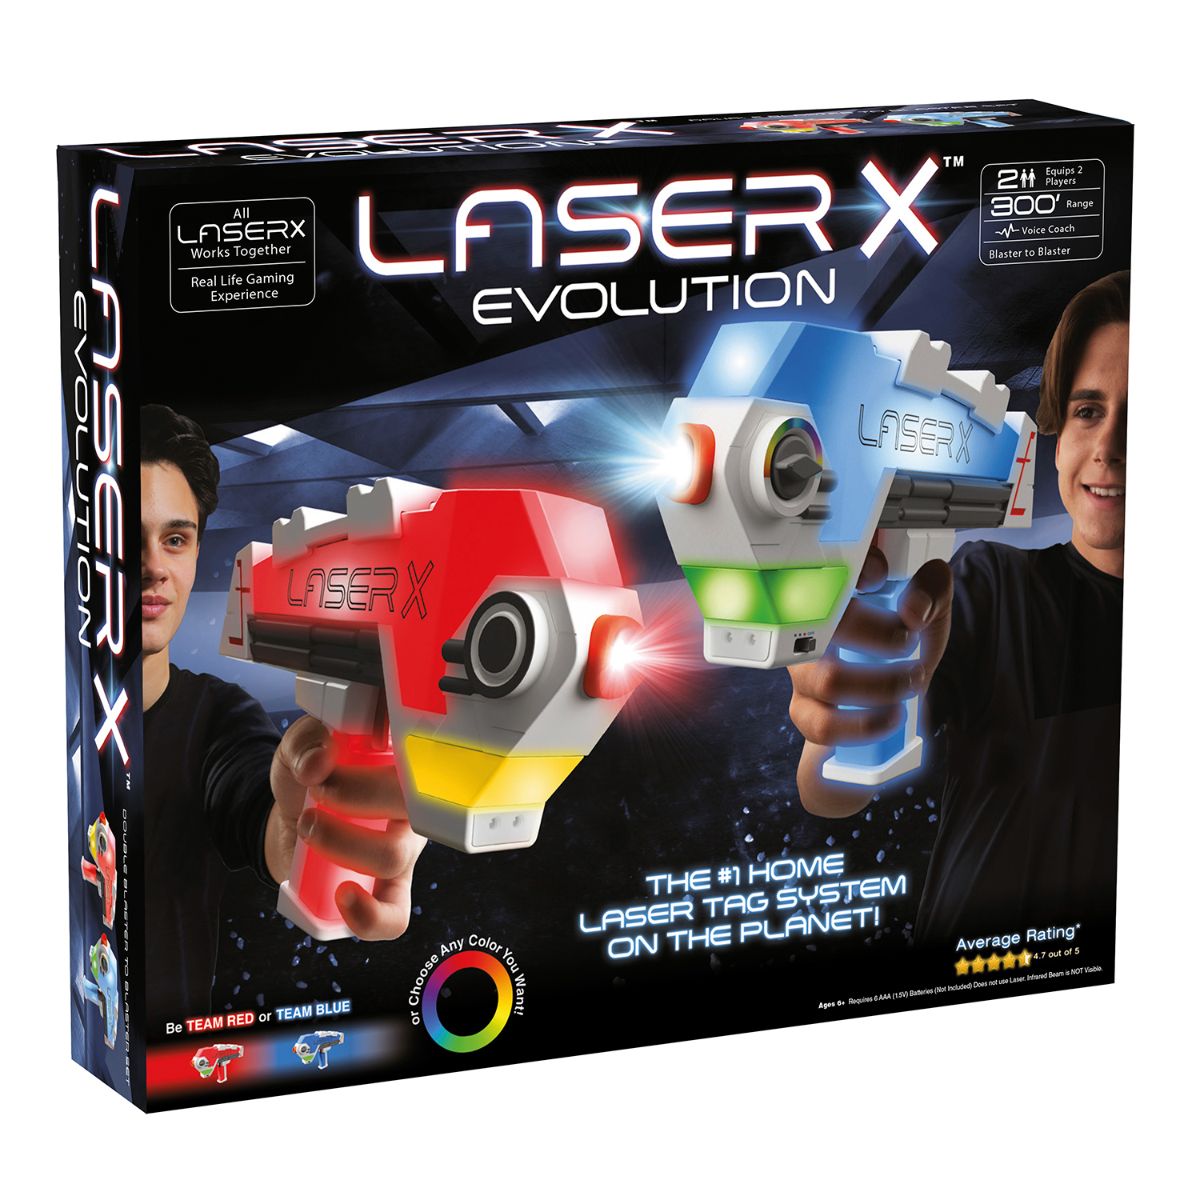 Set Blaster Dubble, Laser X Evolution, B2 aer